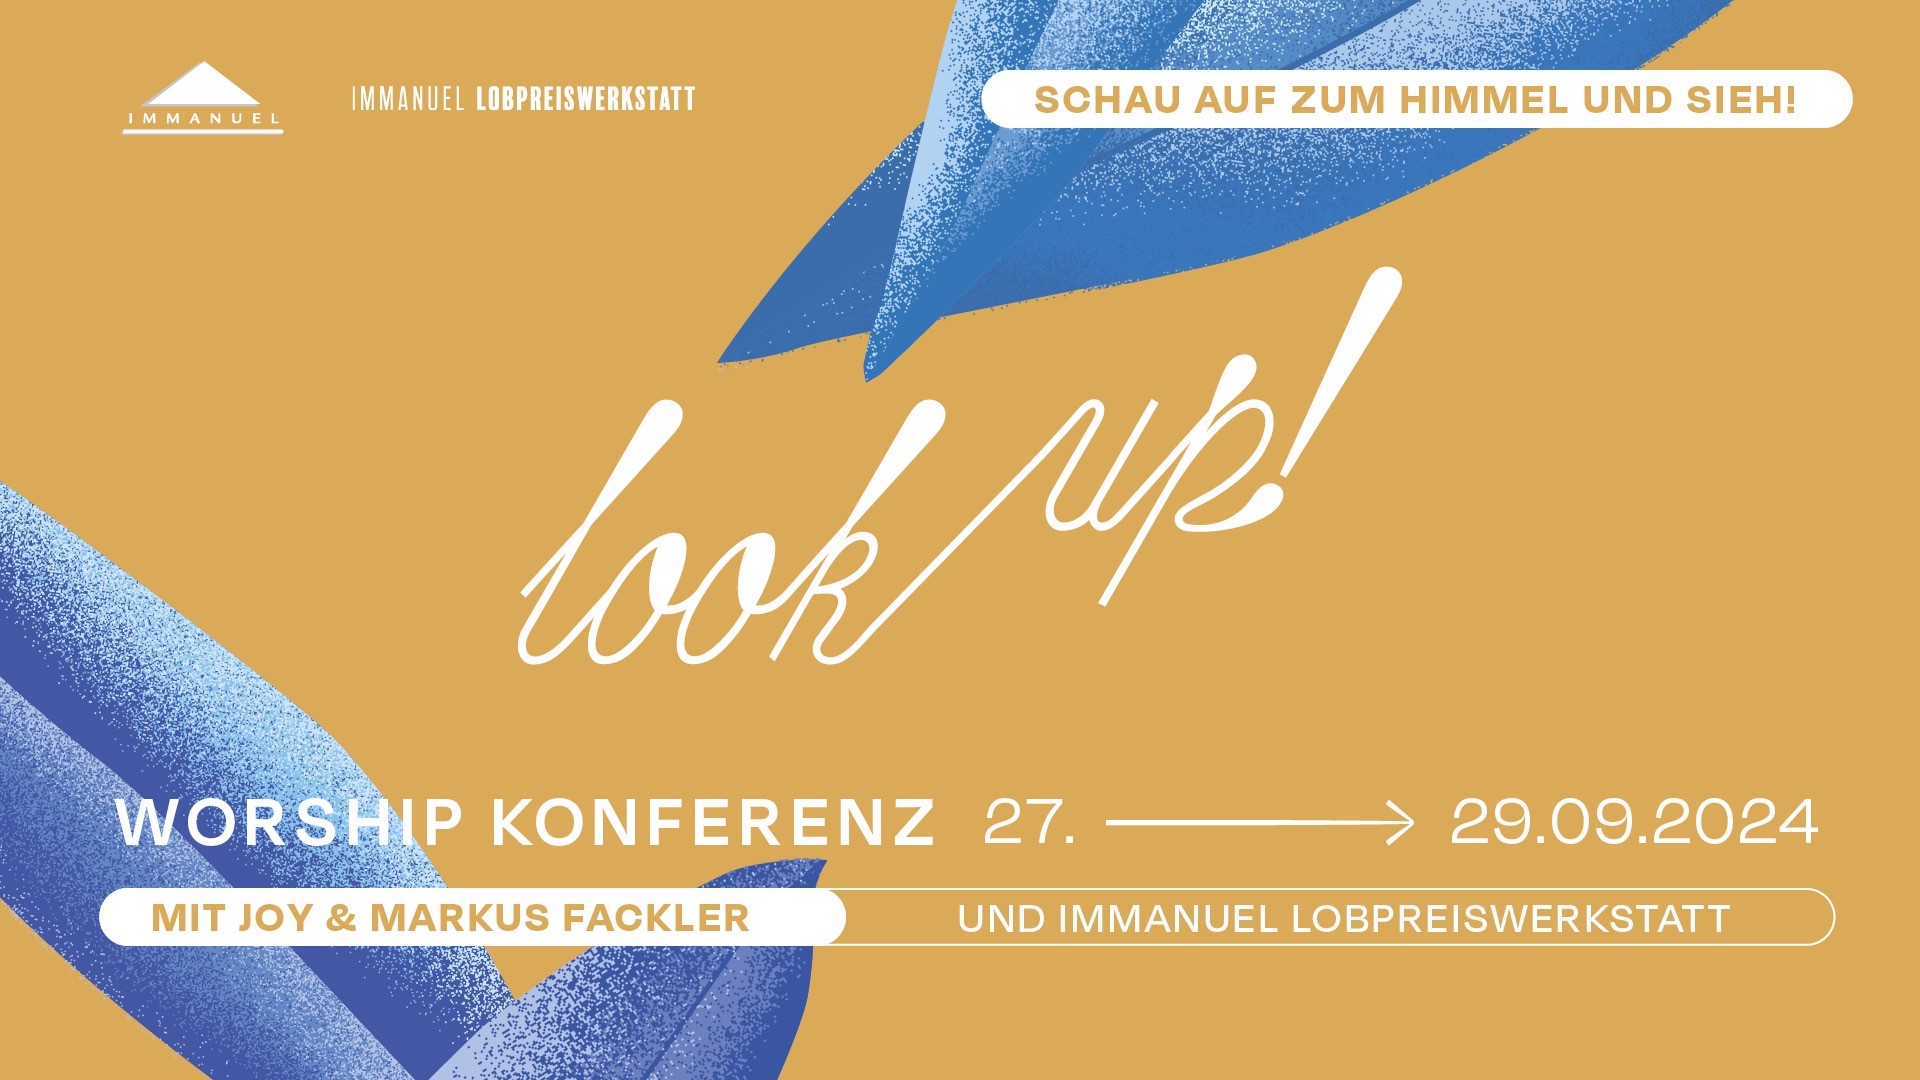 "Look Up" Worship Konferenz in Ravensburg